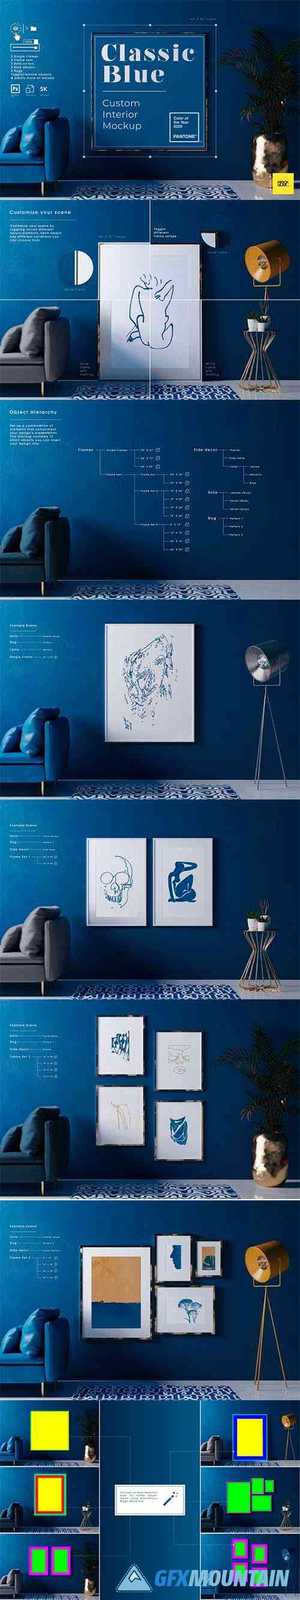 Classic Blue Interior Mockup - Customizable frames furniture